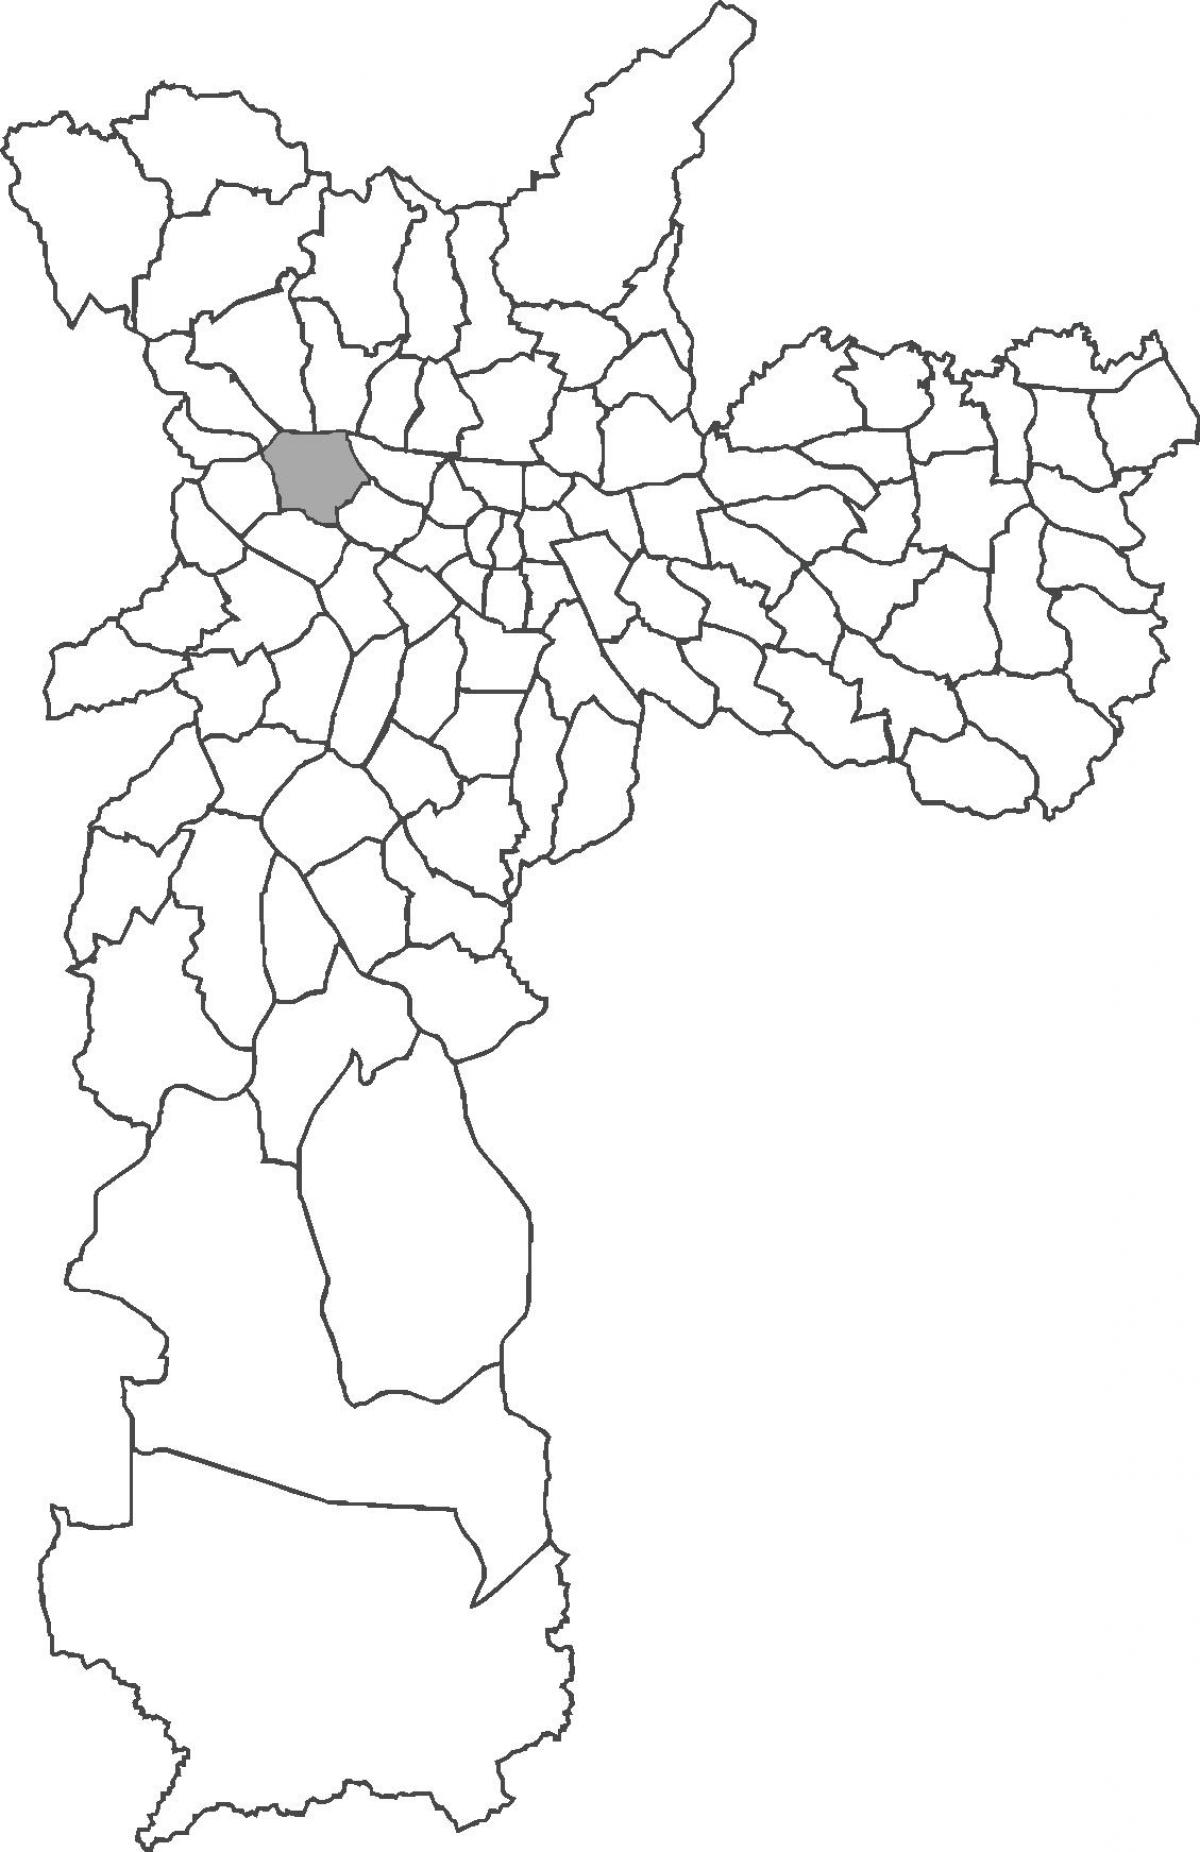 Bản đồ của Lapa quận